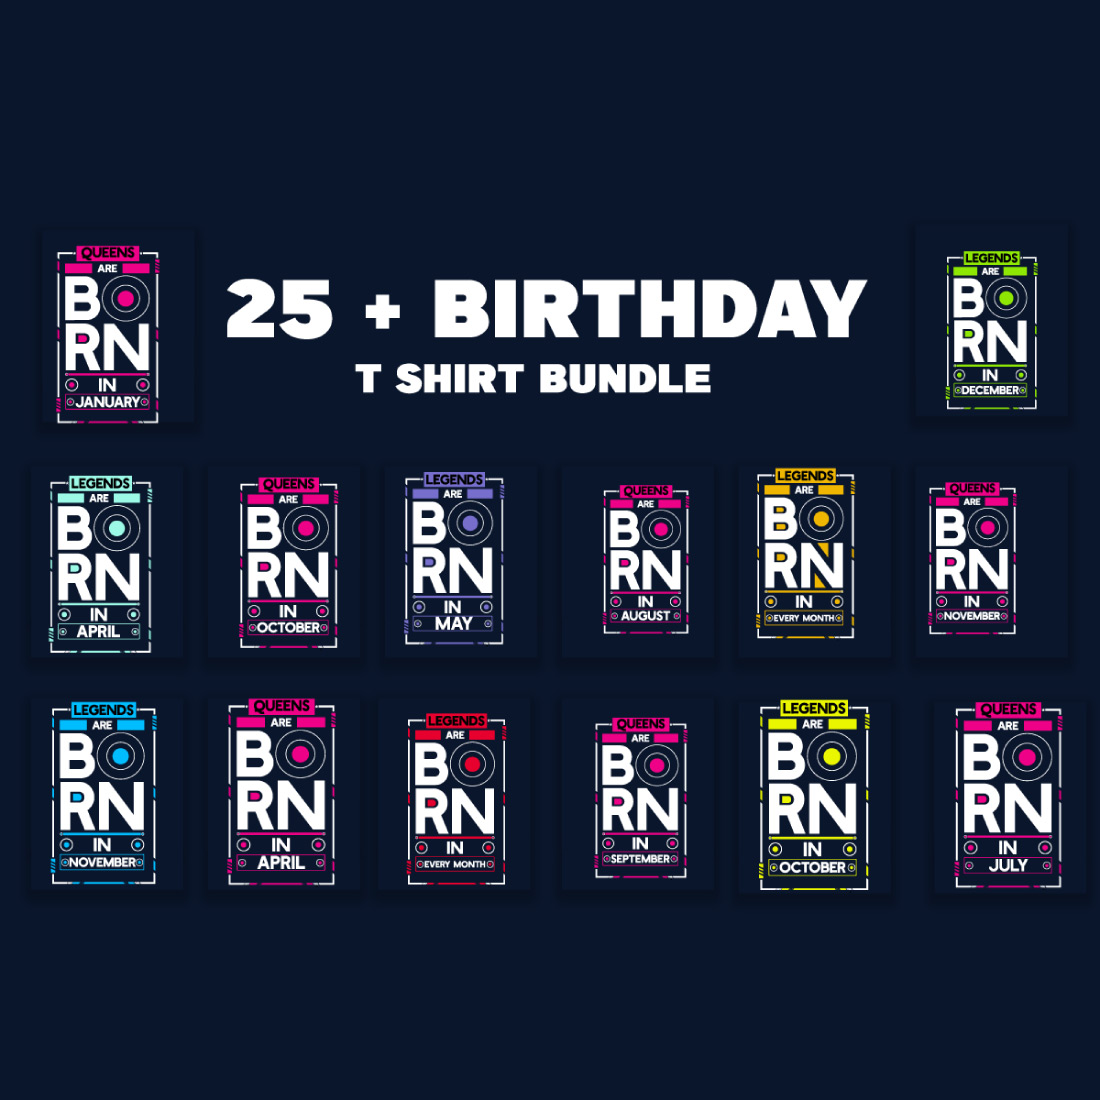 Trendy Birthday T-Shirt Bundle, legends are born and queens are born birthday t shirt preview image.